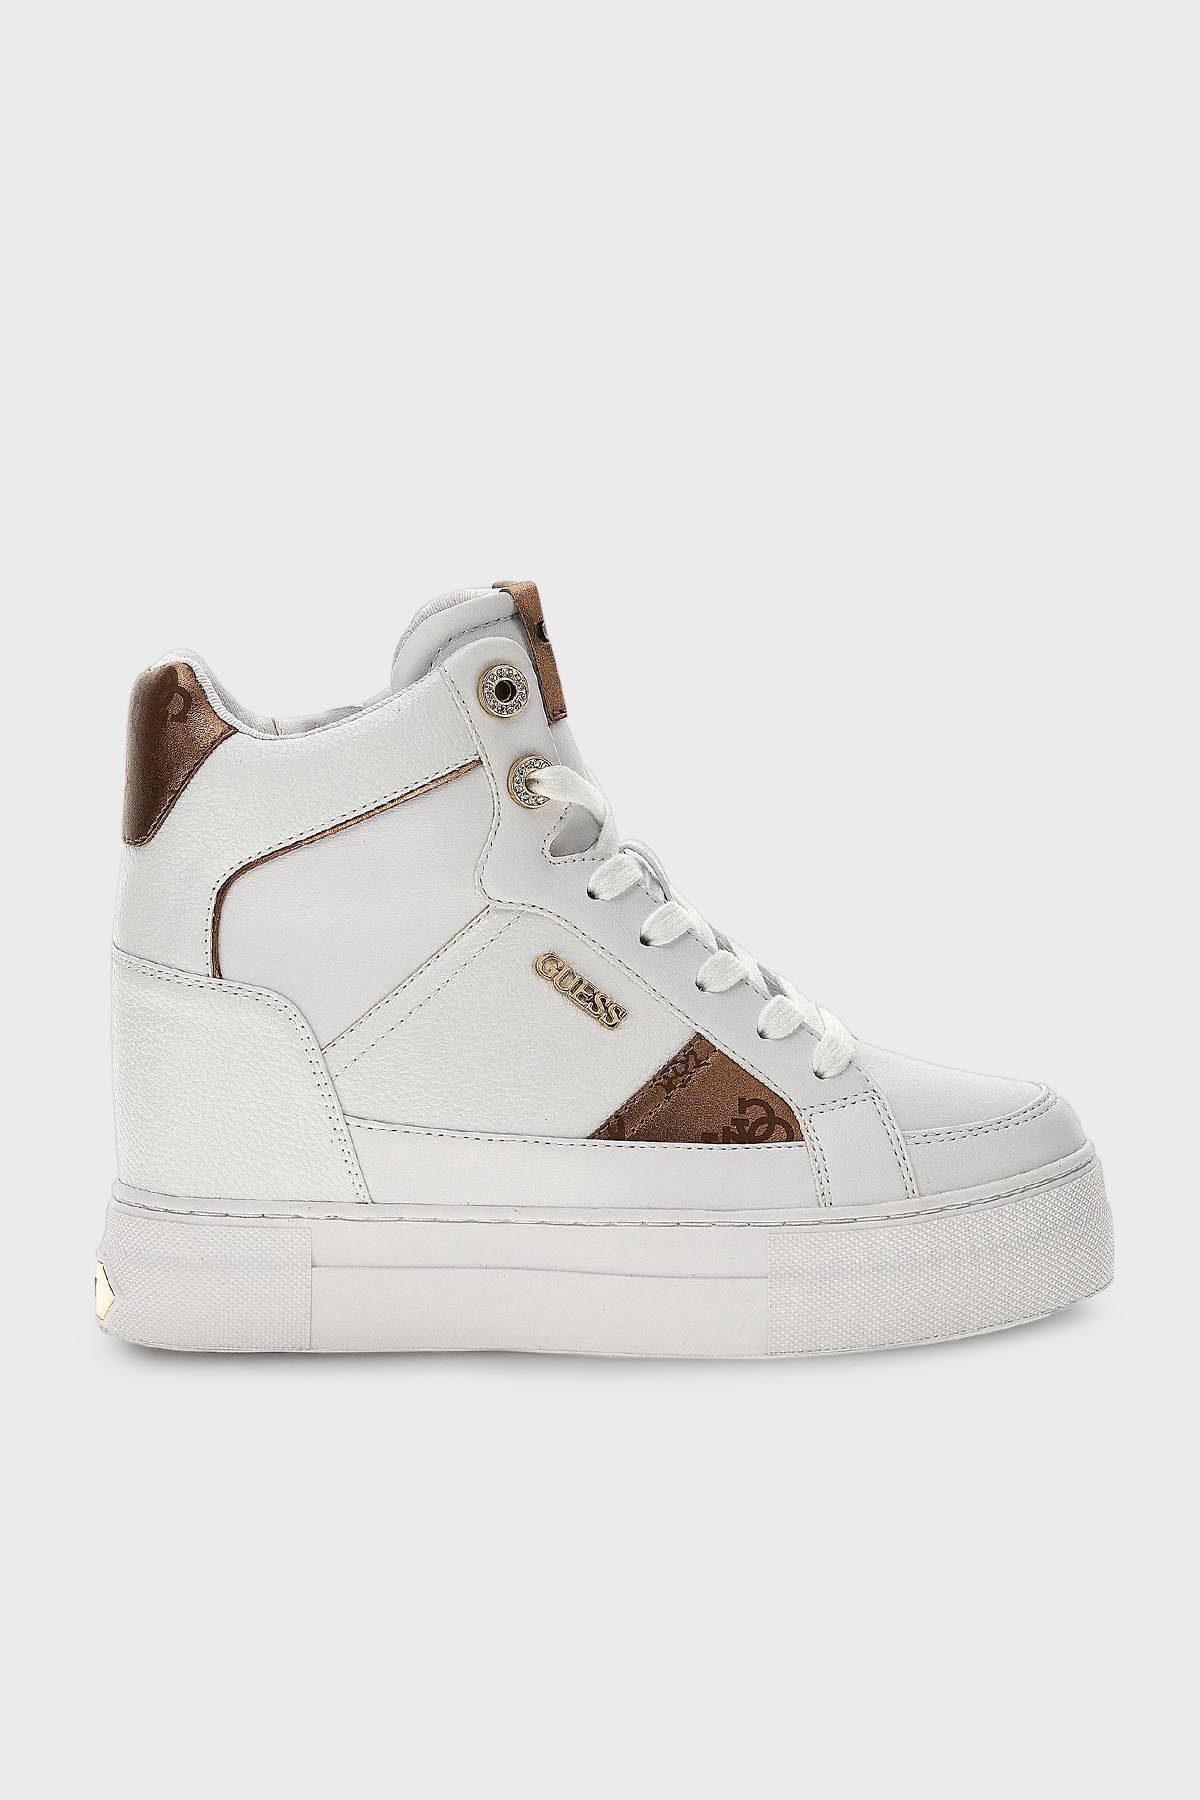 Guess Gizli Topuklu Sneaker Ayakkabı AYAKKABI FL7FRI ELE12 WHITE